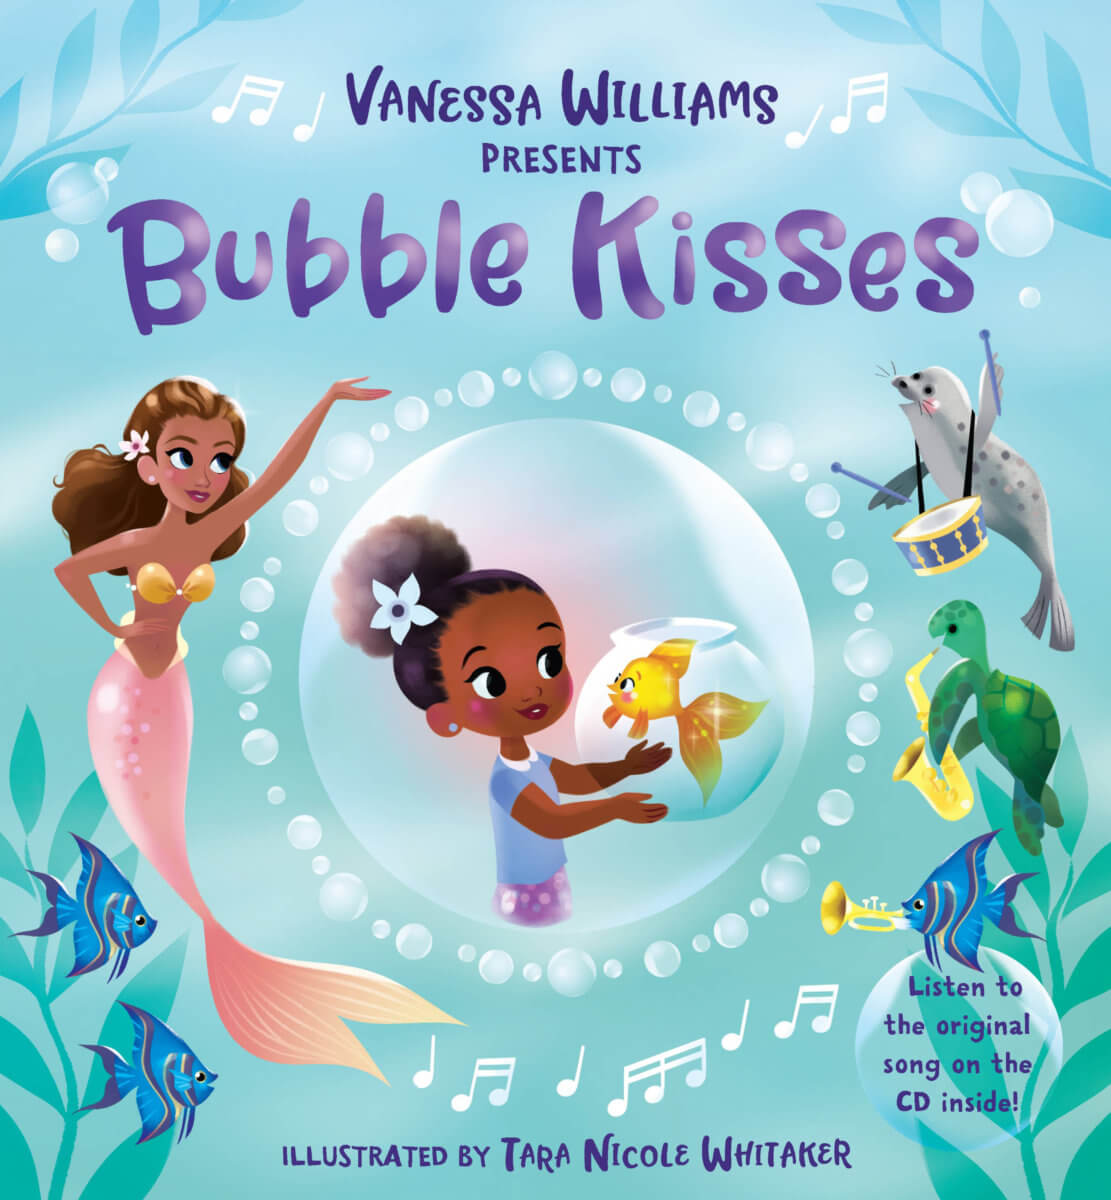 Book cover of “Vanessa Williams Presents Bubble Kisses” by Vanessa Williams.